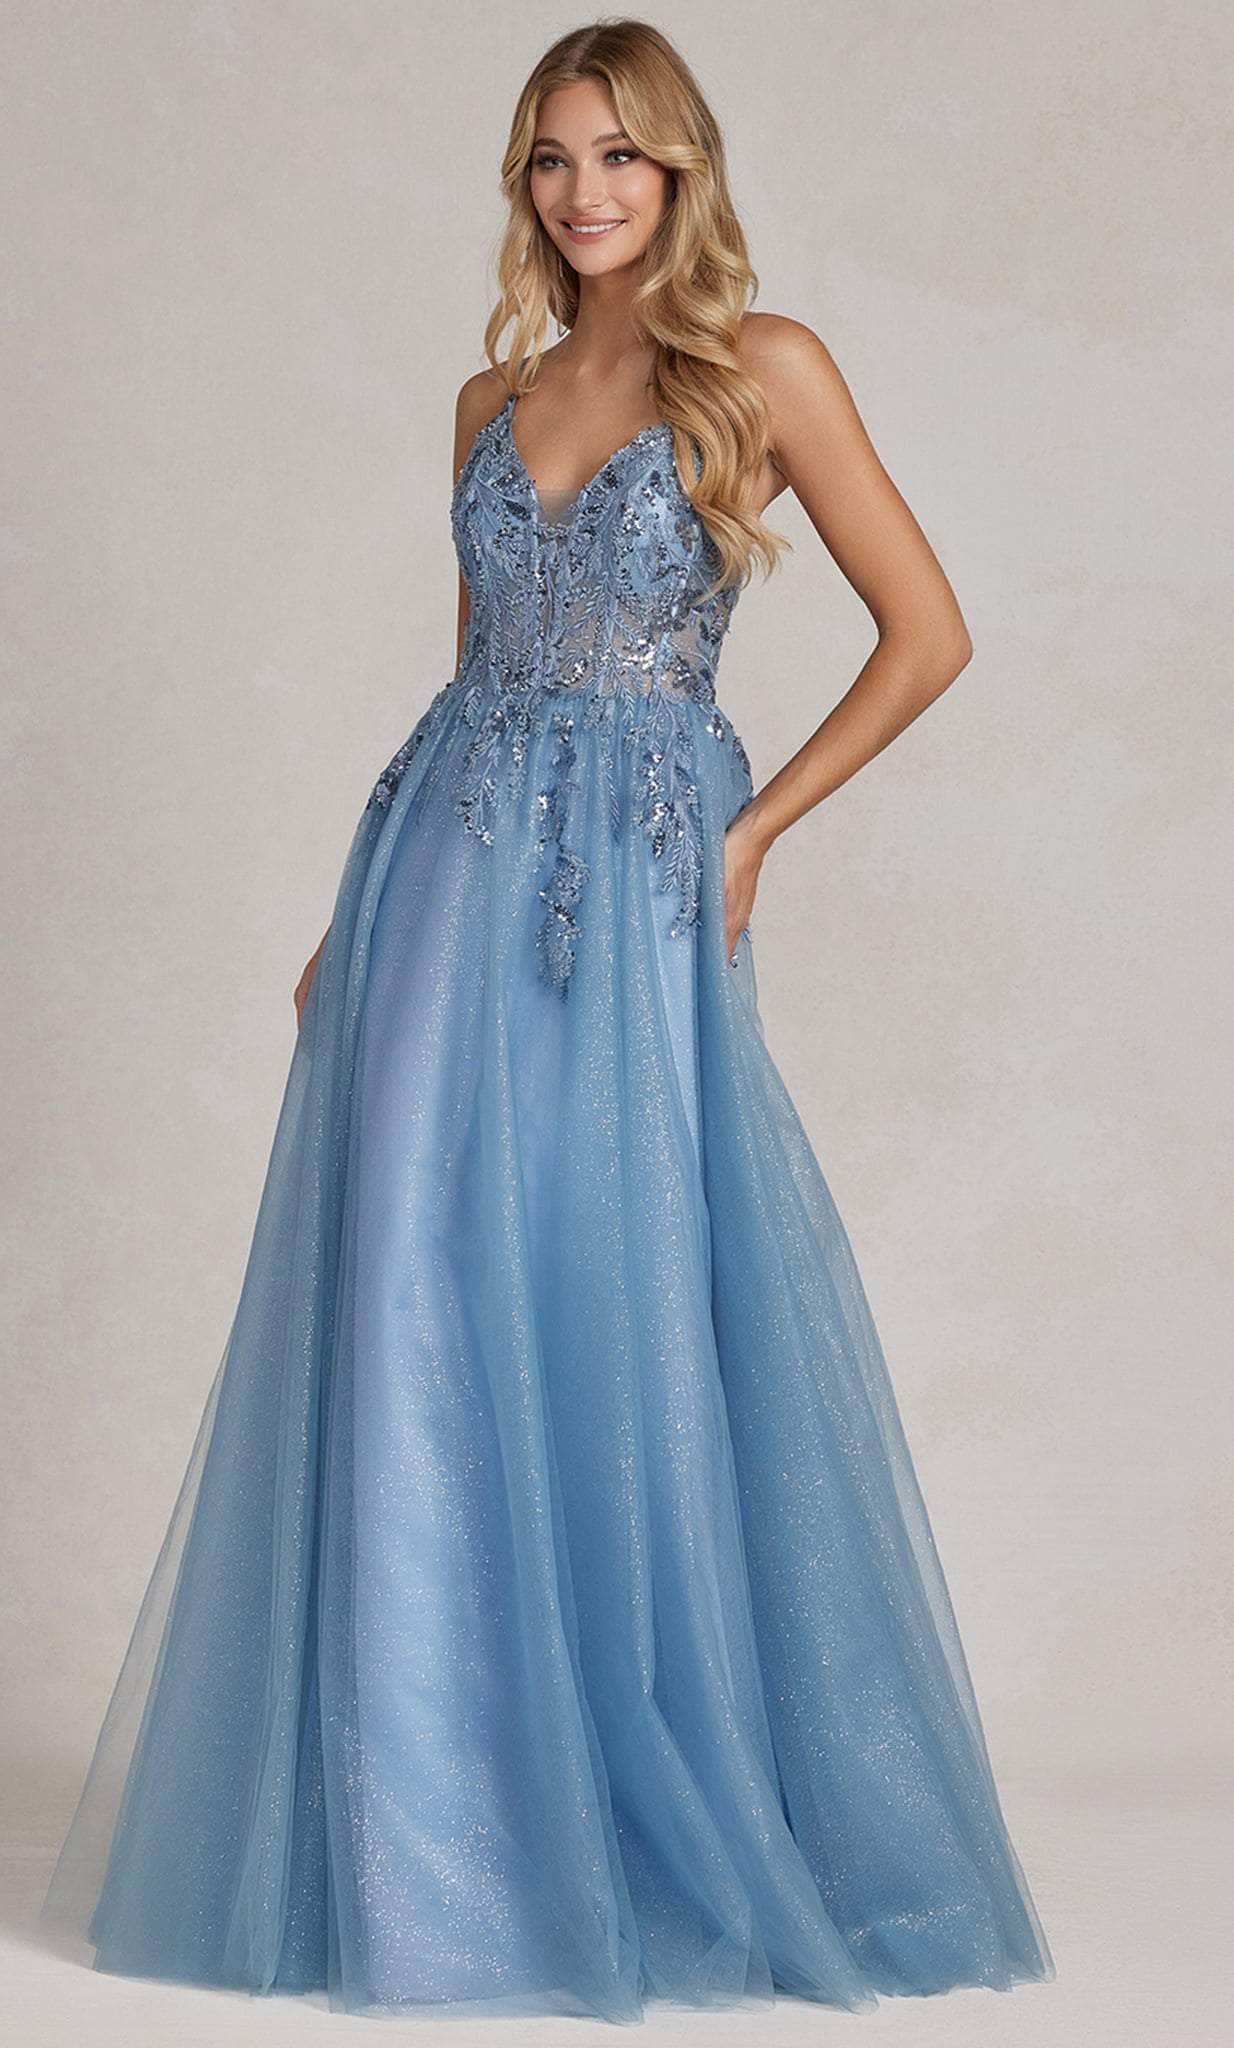 Nox Anabel E1125 - Sleeveless Corset Bodice Ballgown Prom Dresses 0 / Dusty Blue